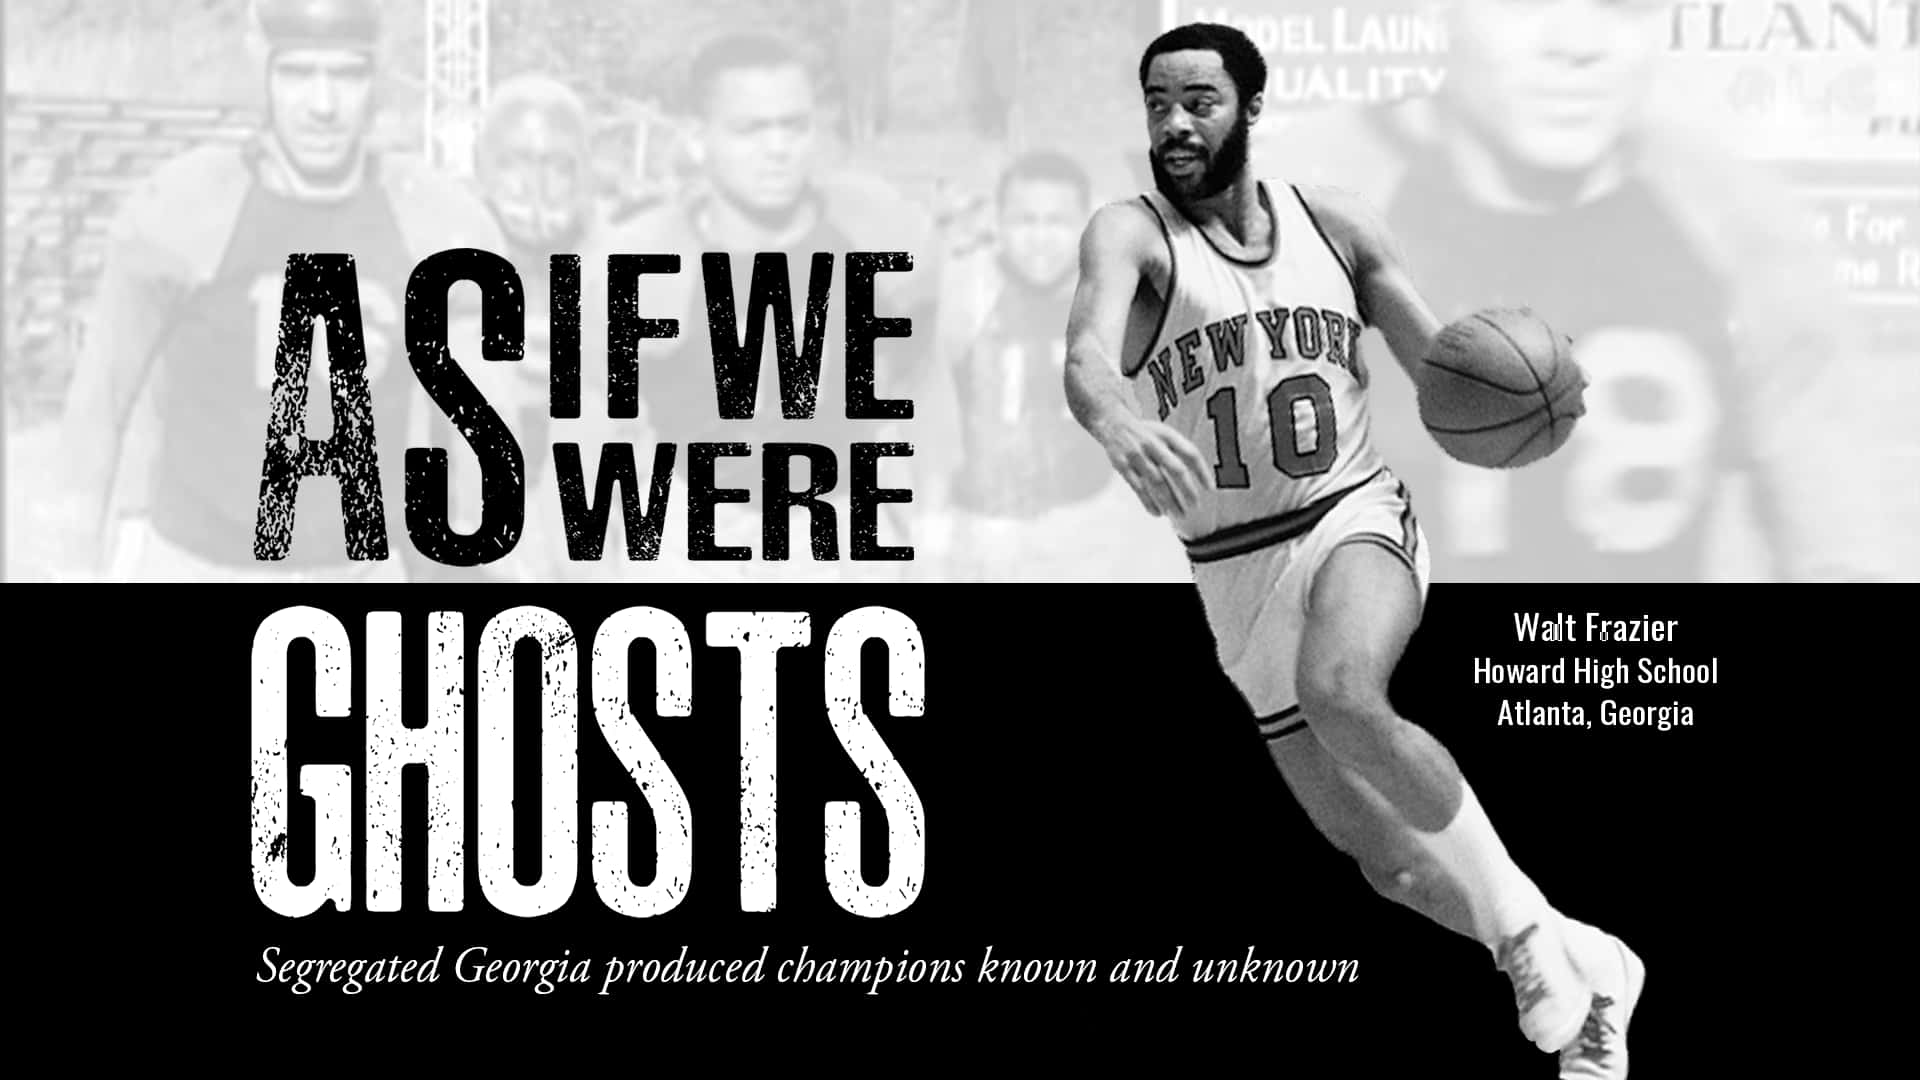 Walt Frazier As If We Were Ghosts Documentary Wallpaper